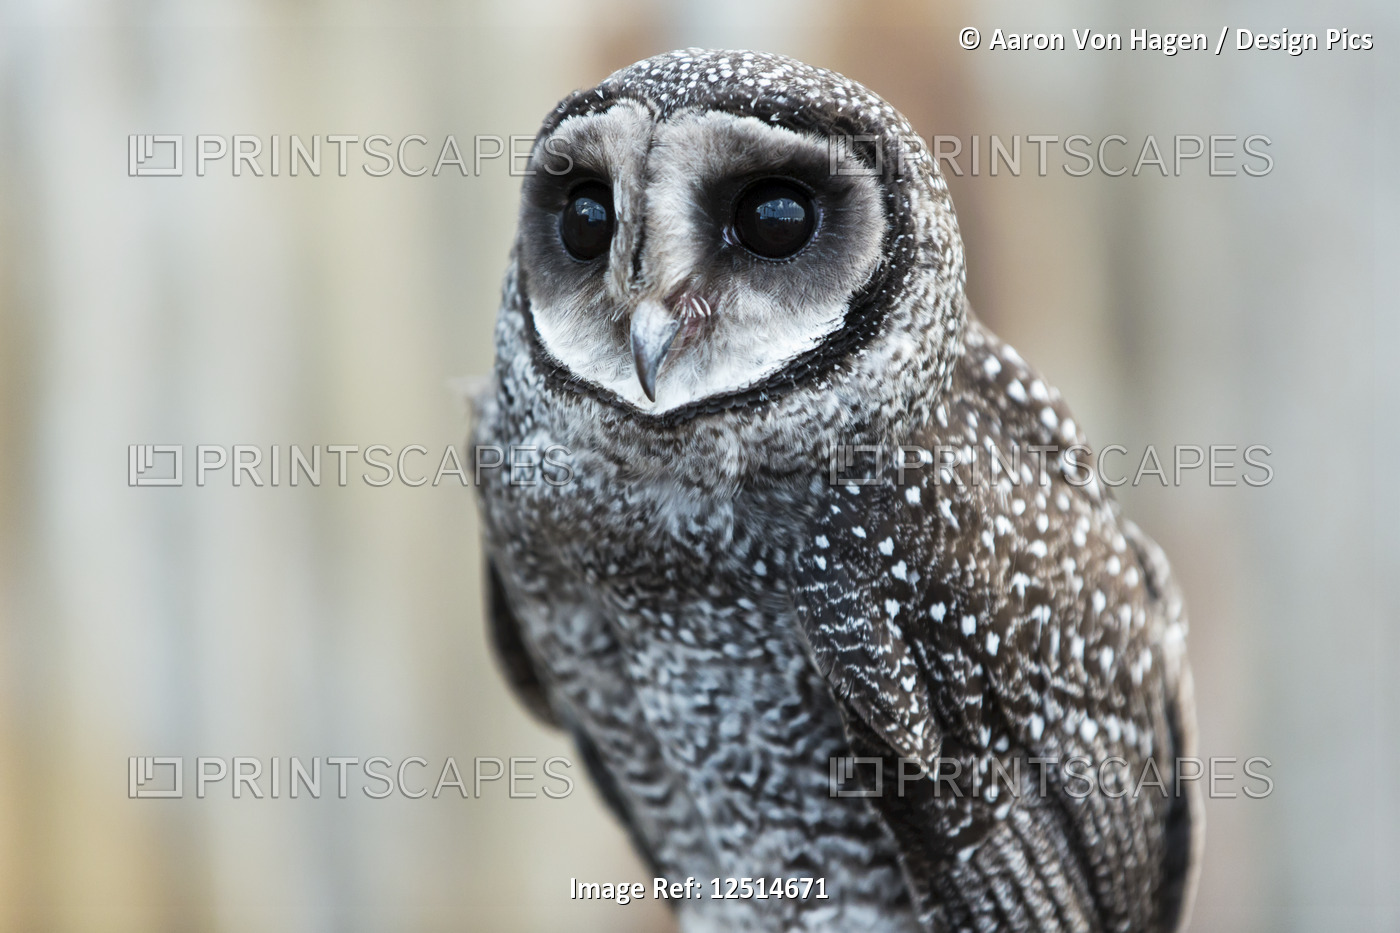 Close-up of an owl; Whiteman, Western Australia, Australia